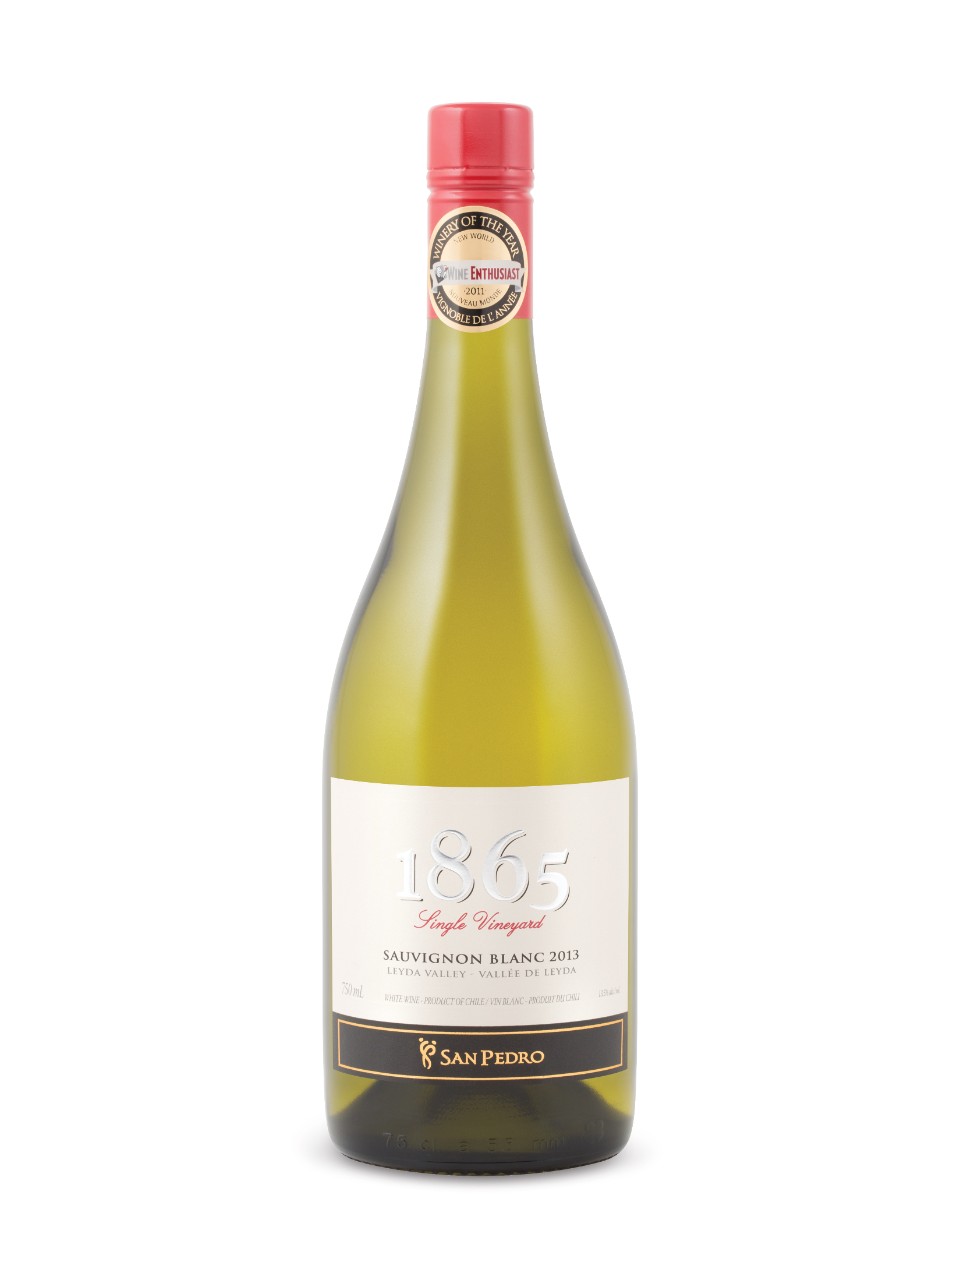 San Pedro 1865 Single Vineyard Sauvignon Blanc 2013